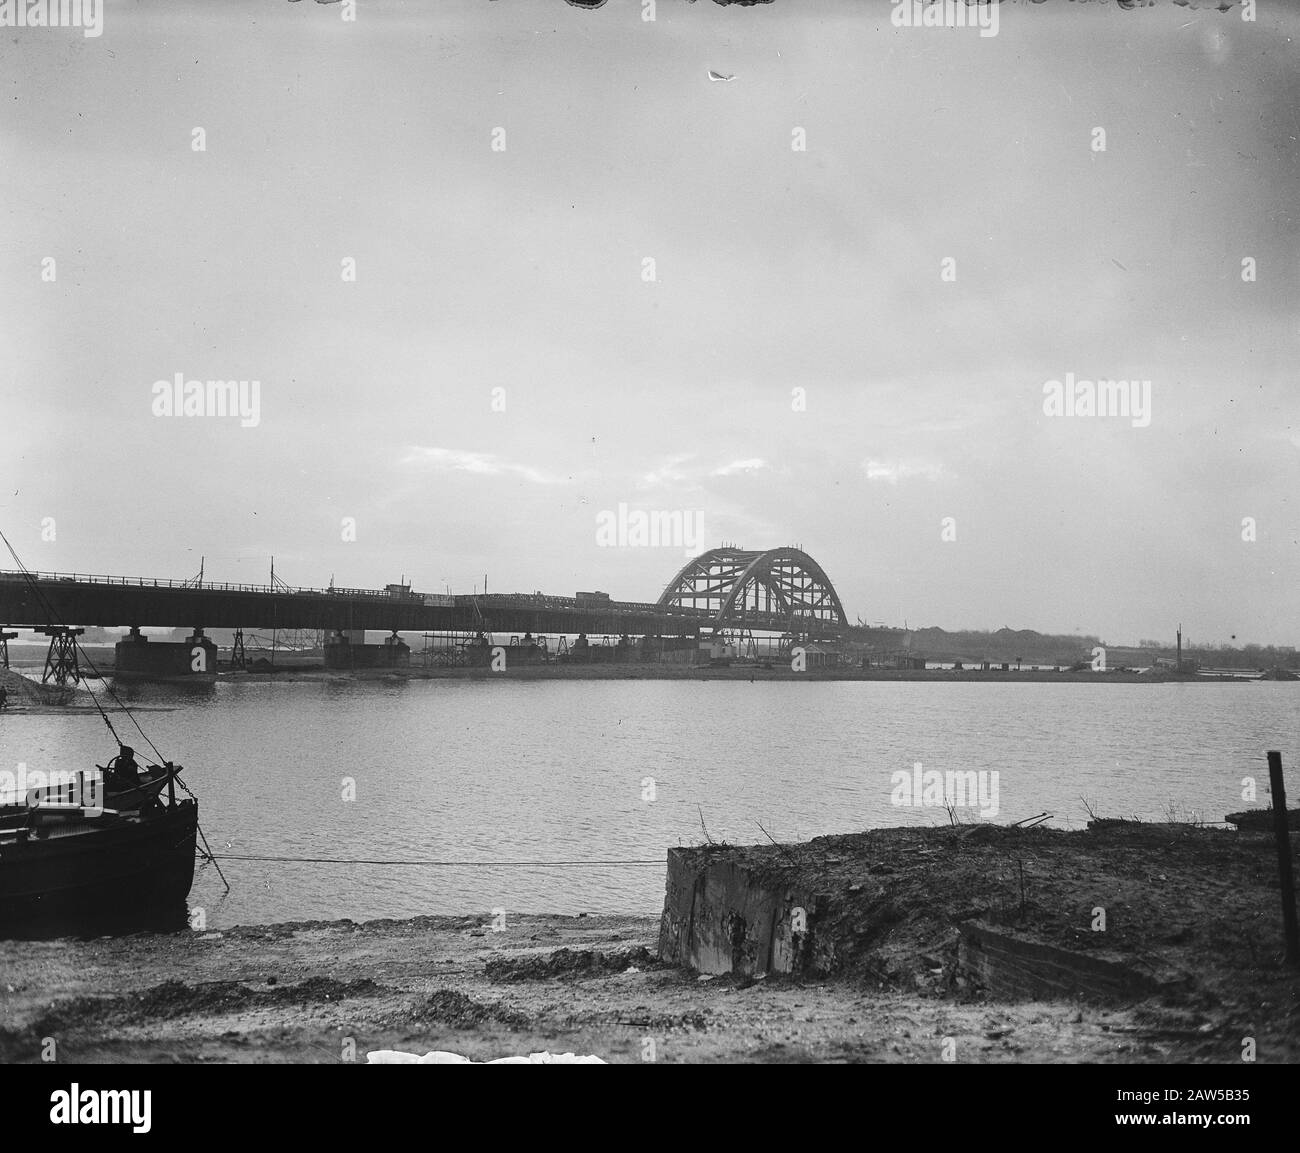 Emergency Bridge Hedel Date: January 22, 1948 Location: Hedel Stock Photo